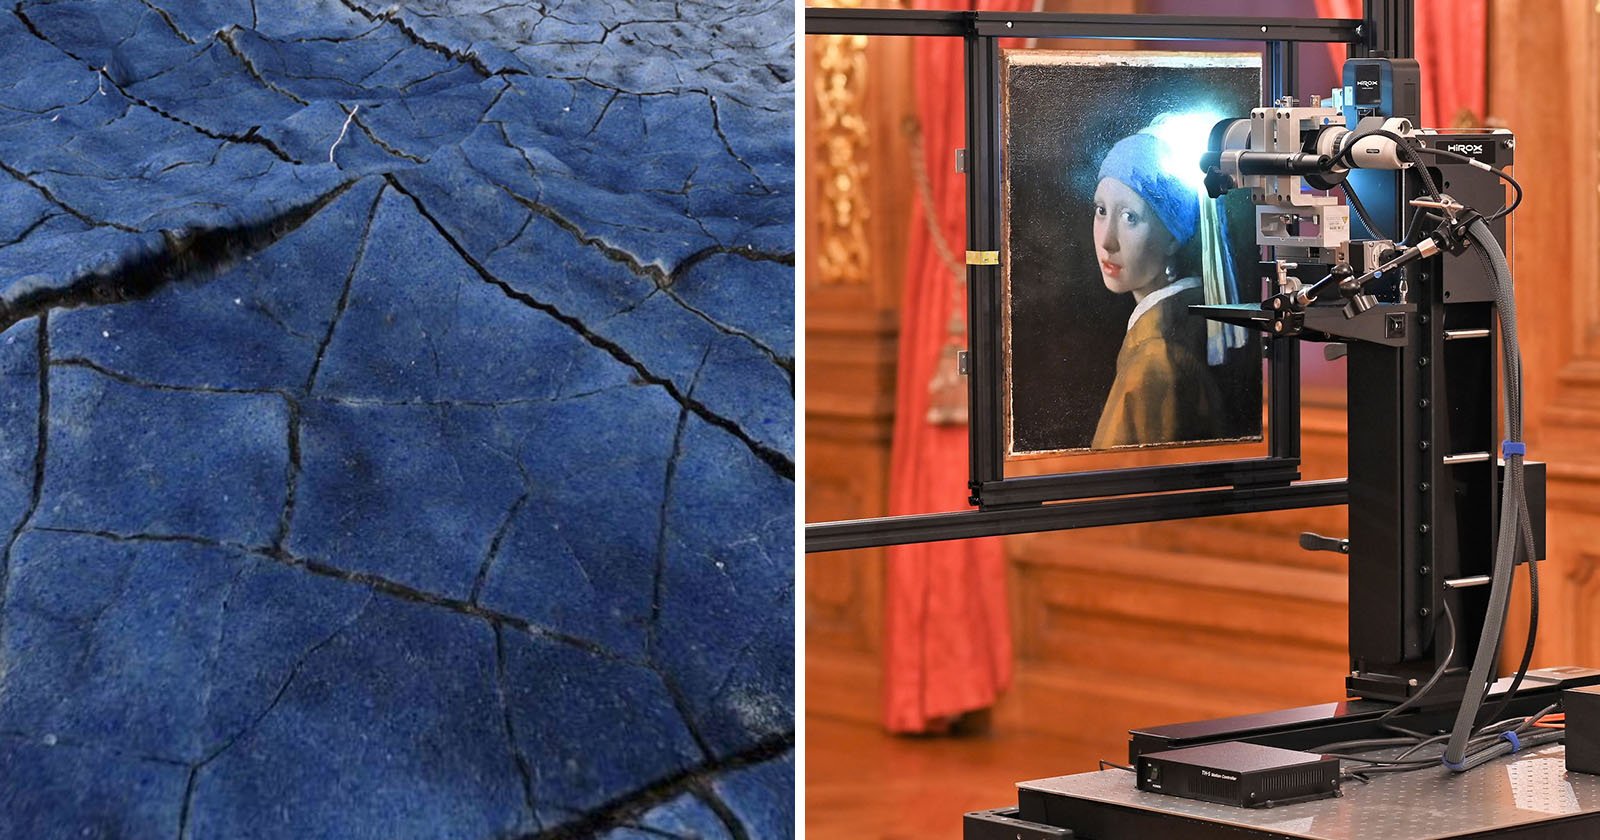 108-Gigapixel 3D Microscope Scan of Vermeer Masterpiece is Largest Ever